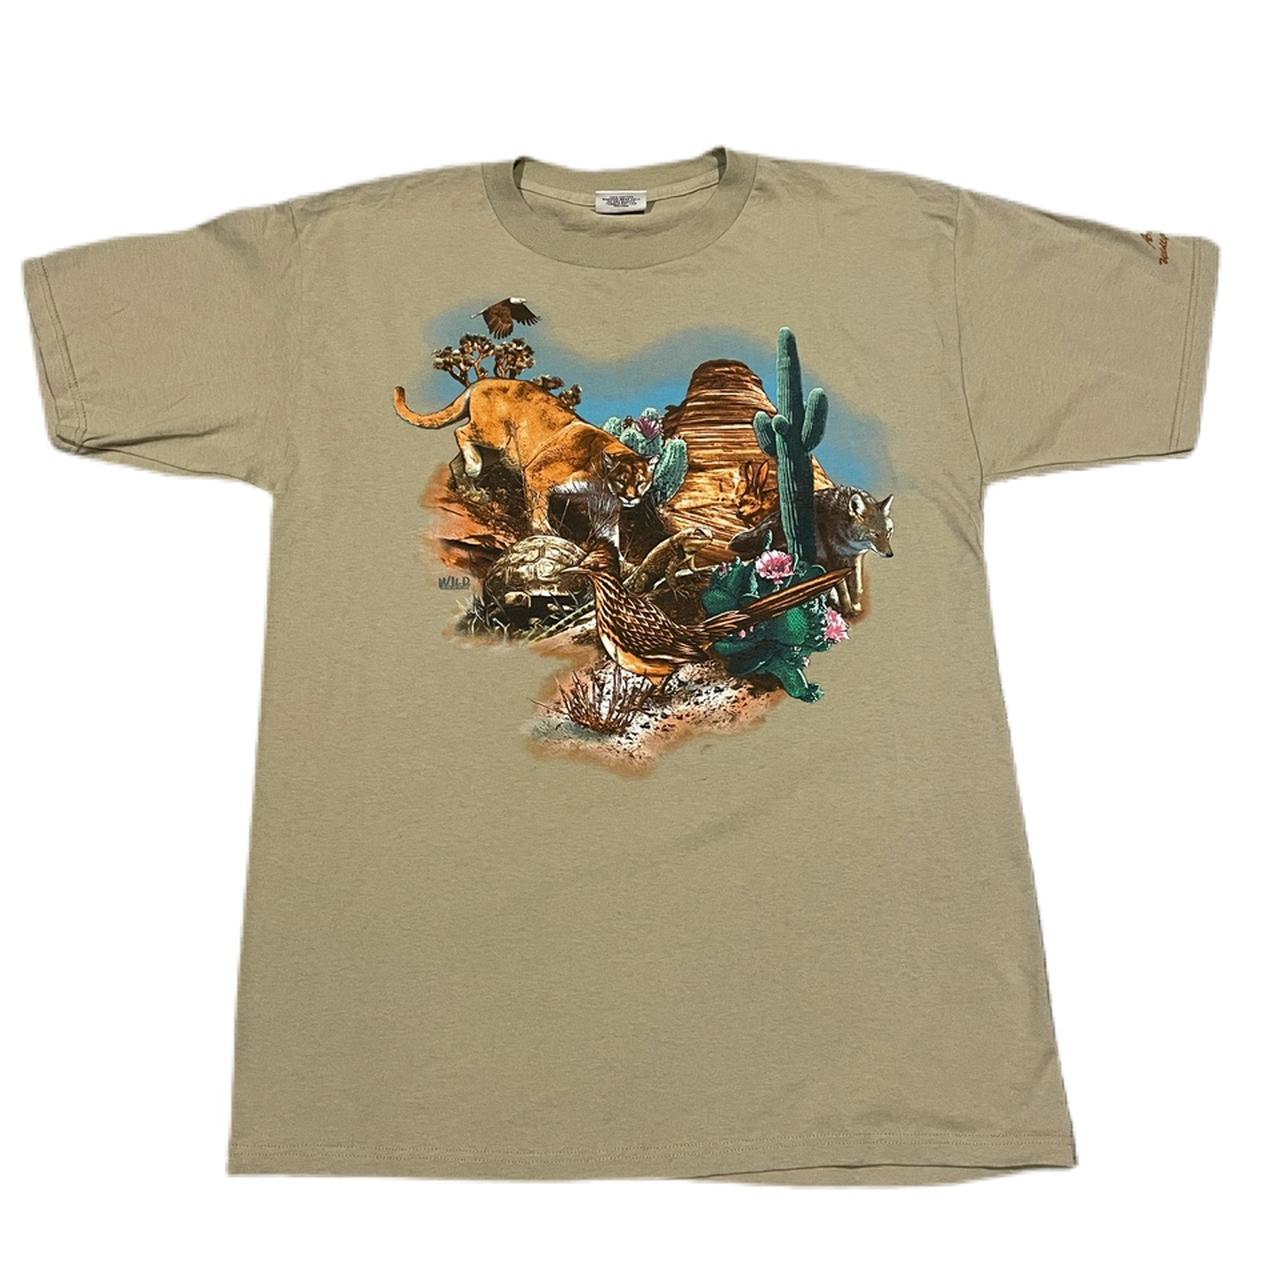 Wild Men's Tan and Brown T-shirt